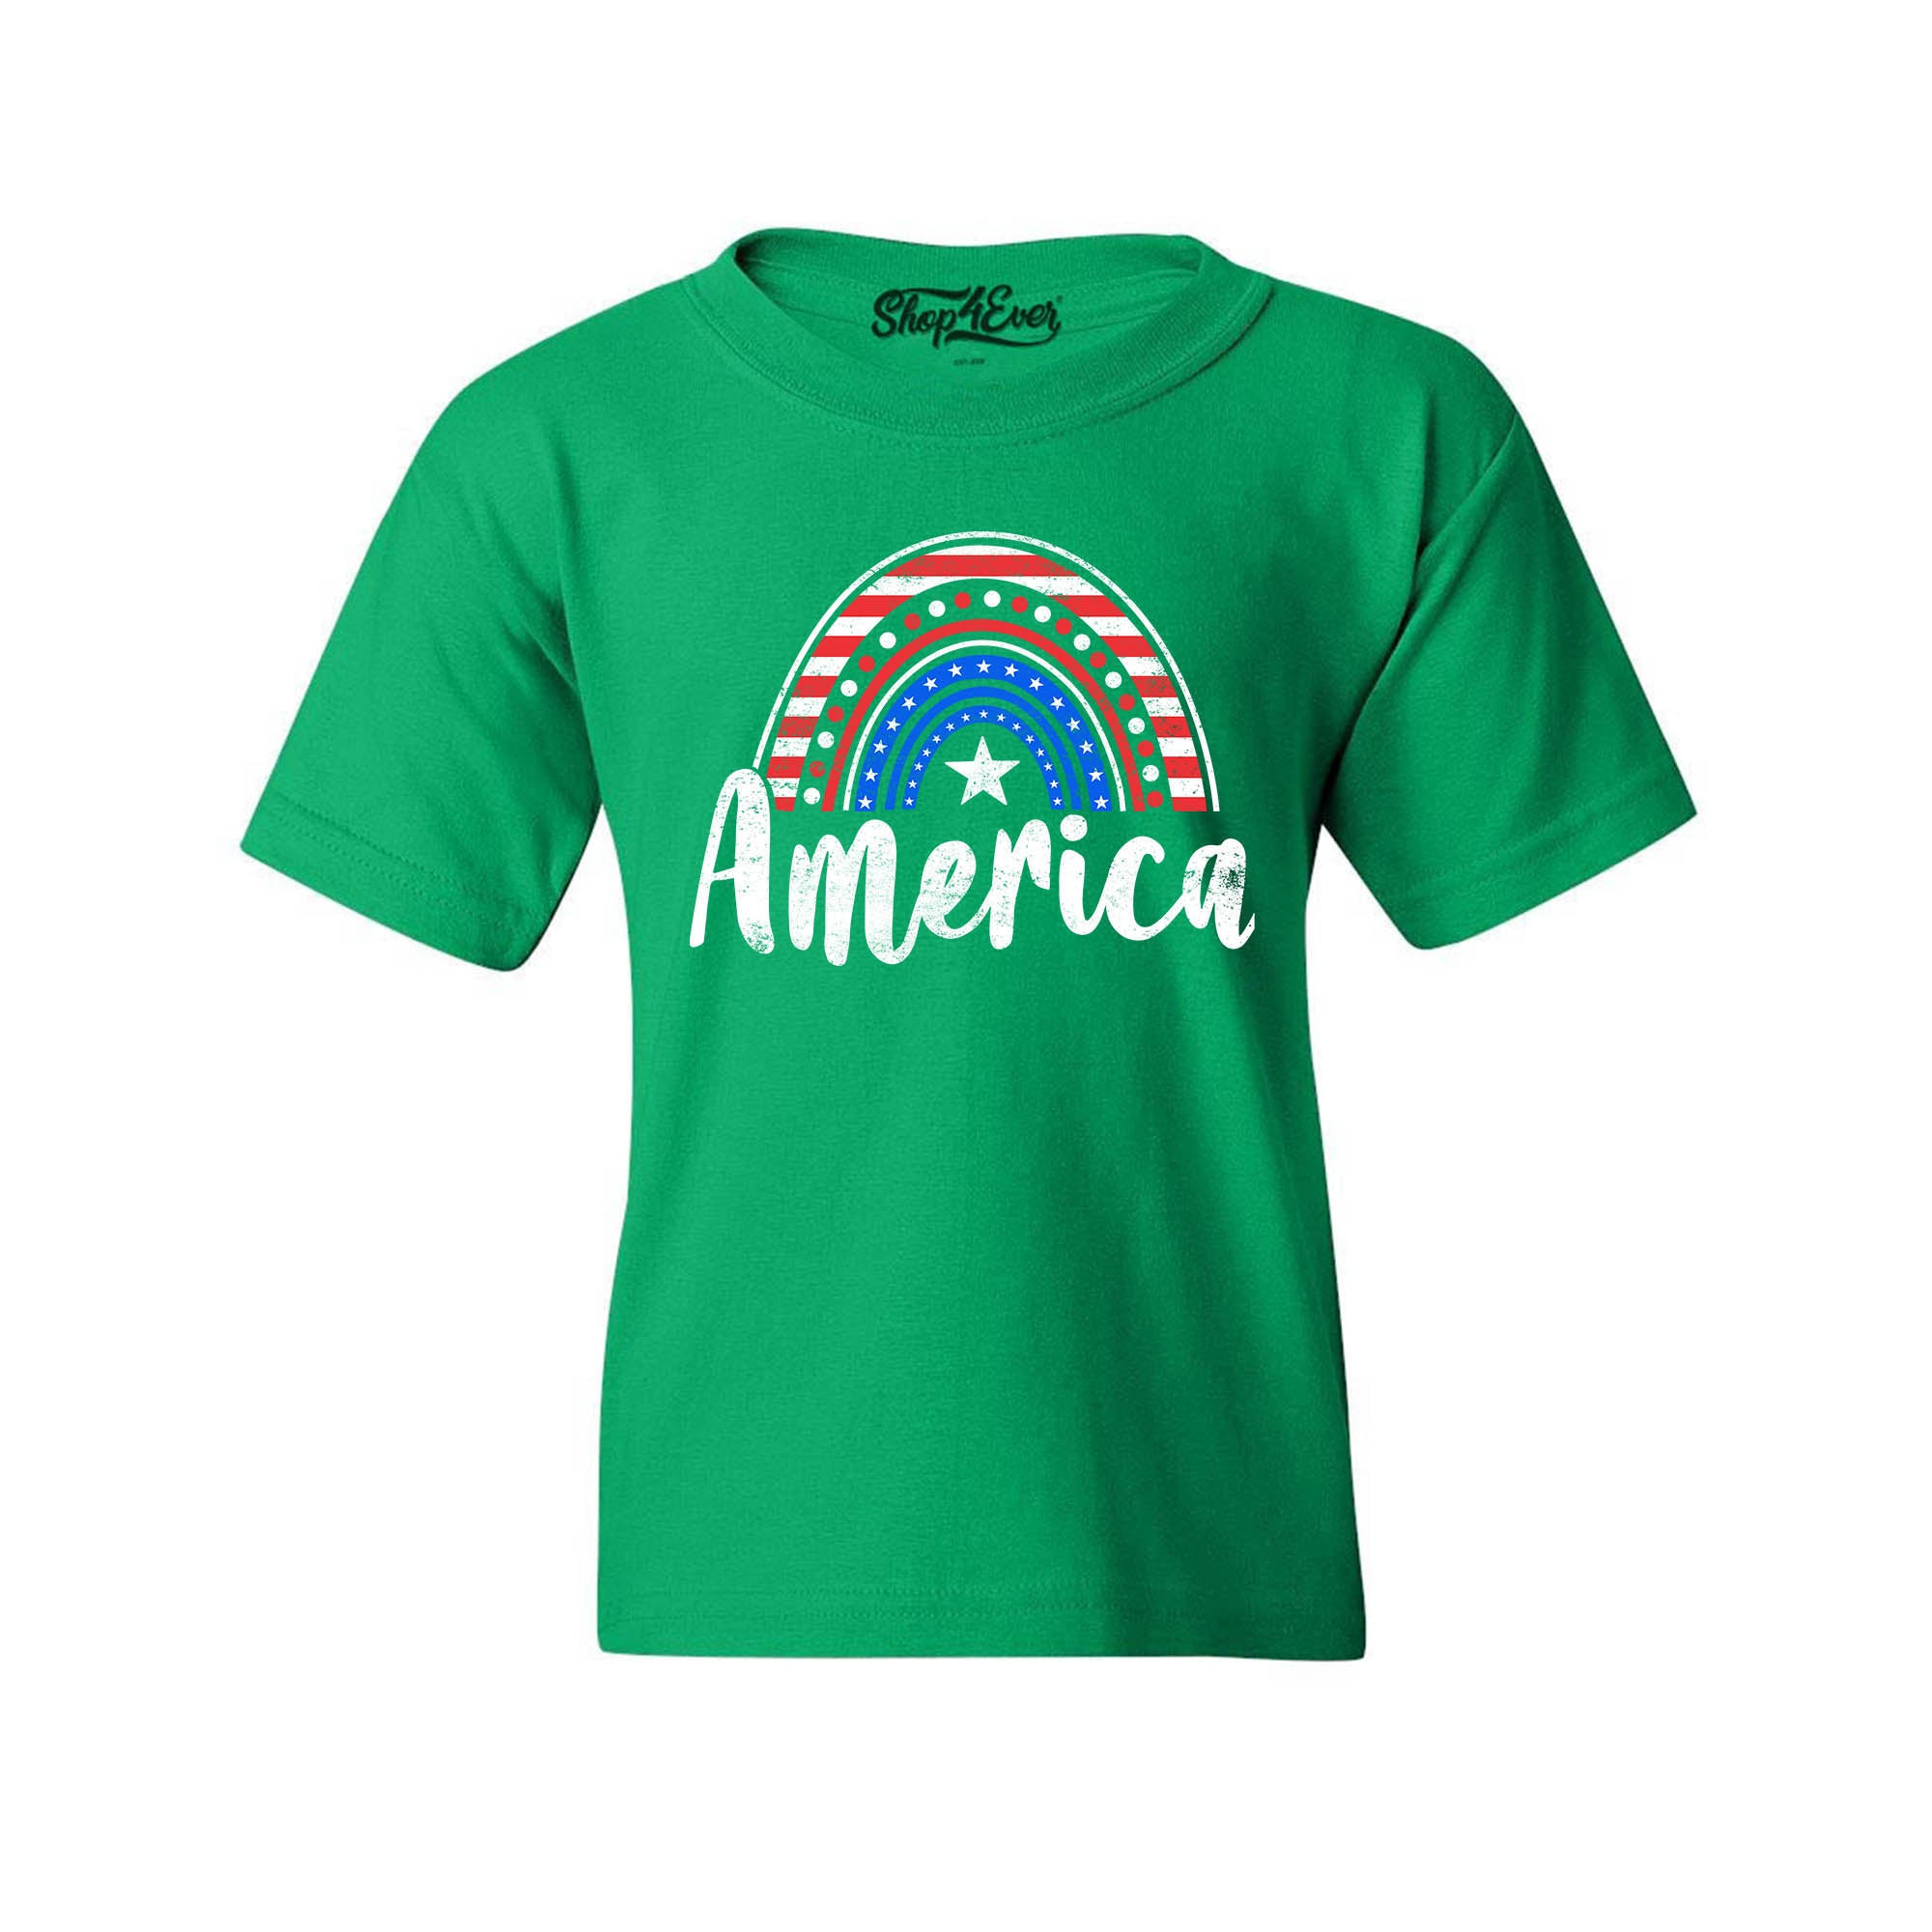 America Patriotic Rainbow 4th of July Child's T-Shirt Kids Tee